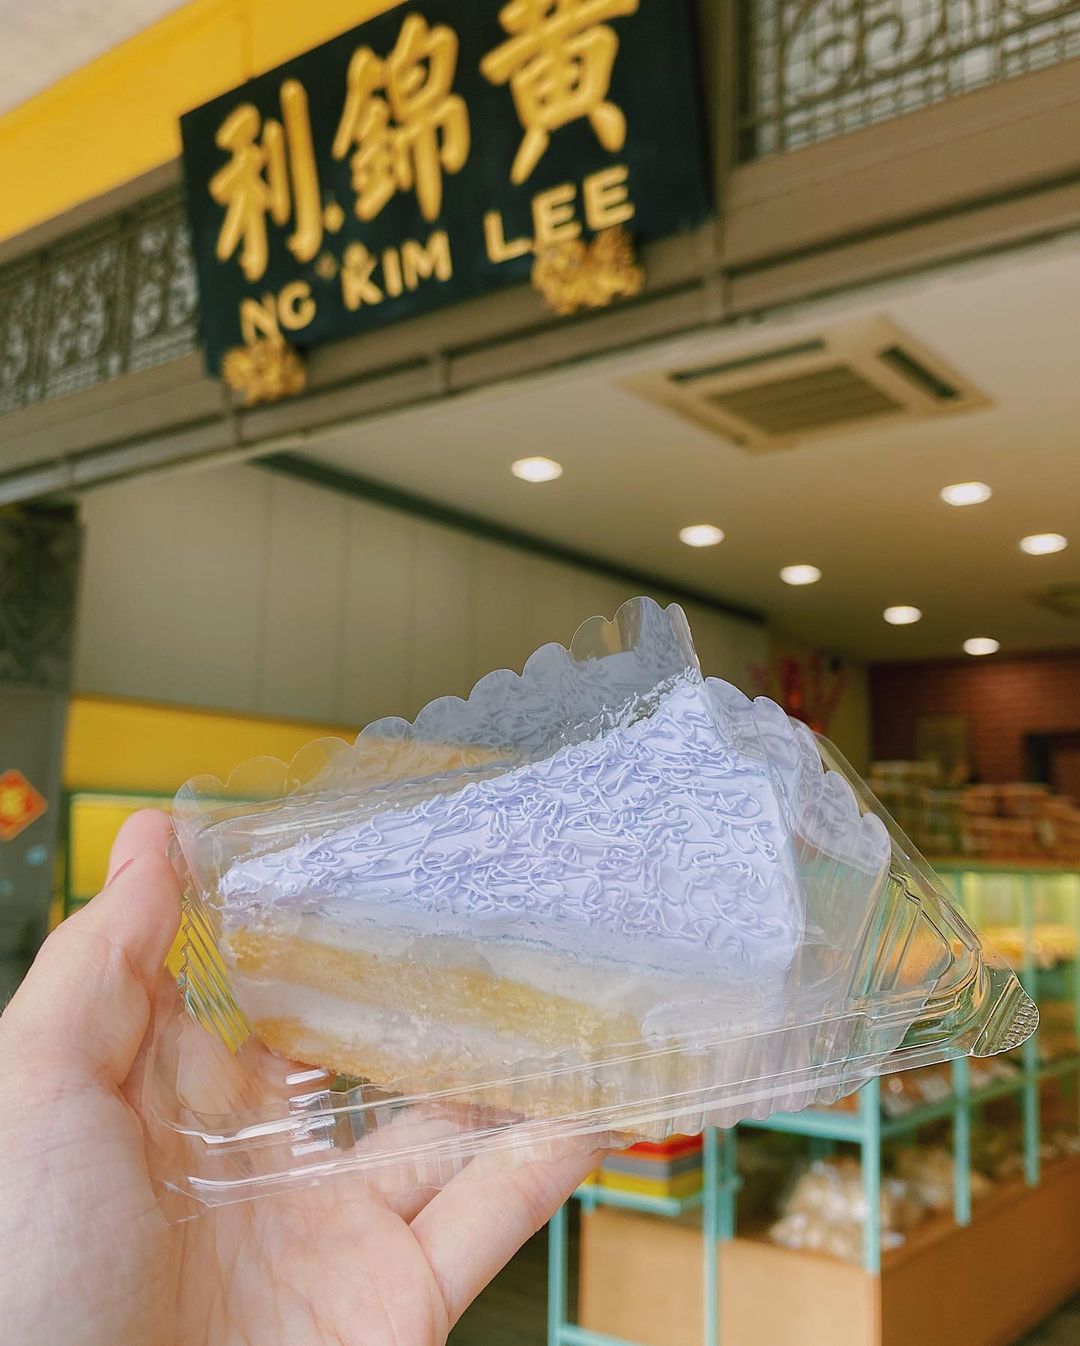 Ng-Kim-Lee-Confectionery-yam-mousse-cake (4)